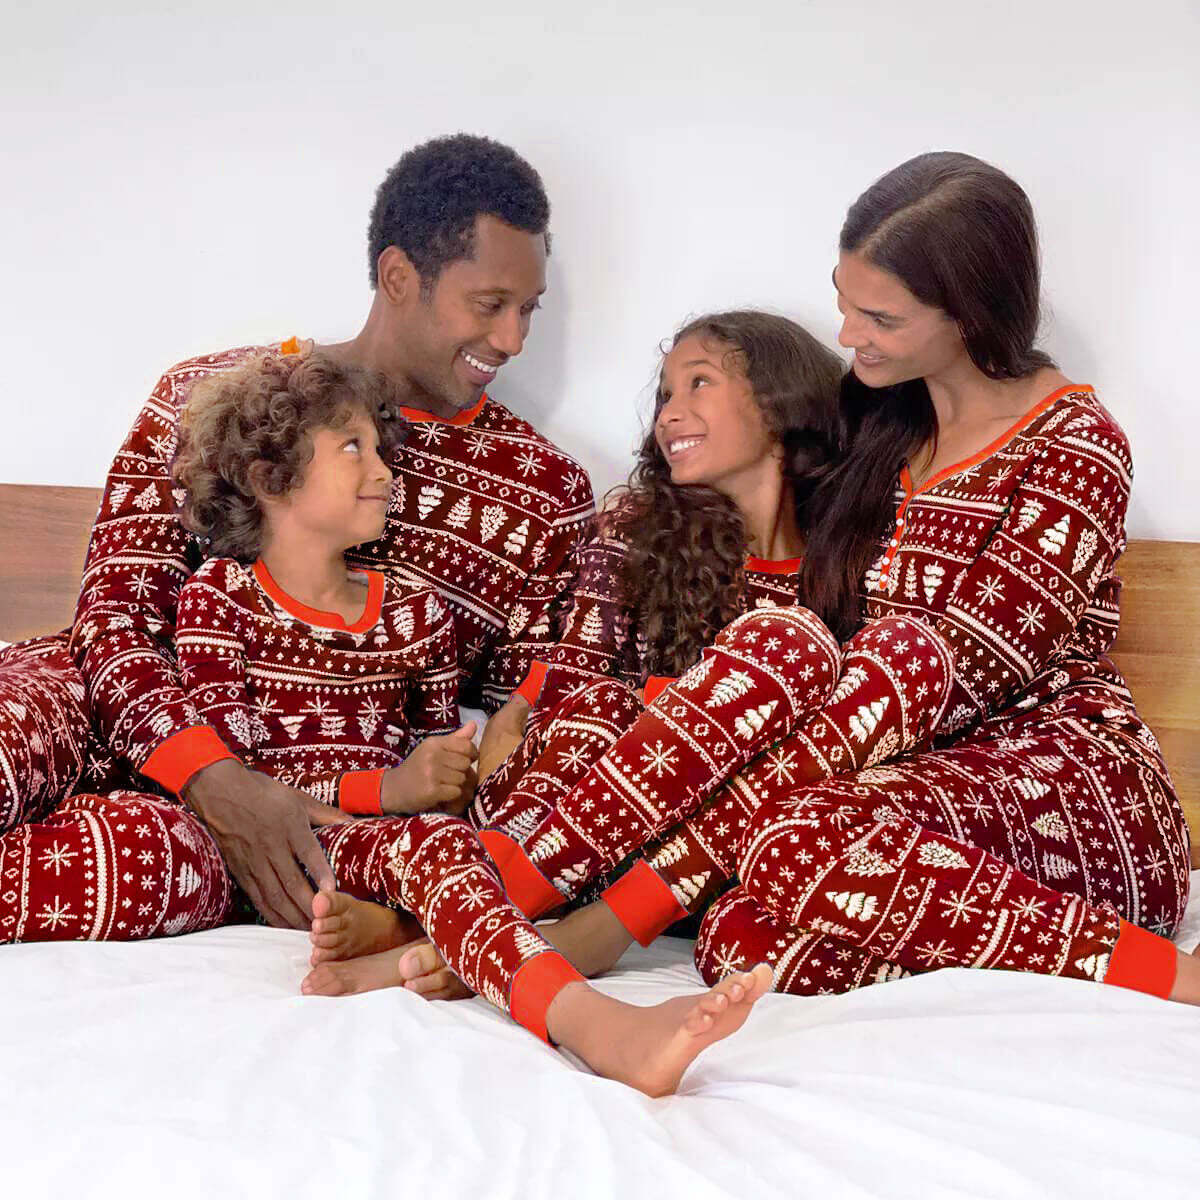 Red Christmas Tree Pattern Family Matching Pajamas Sets